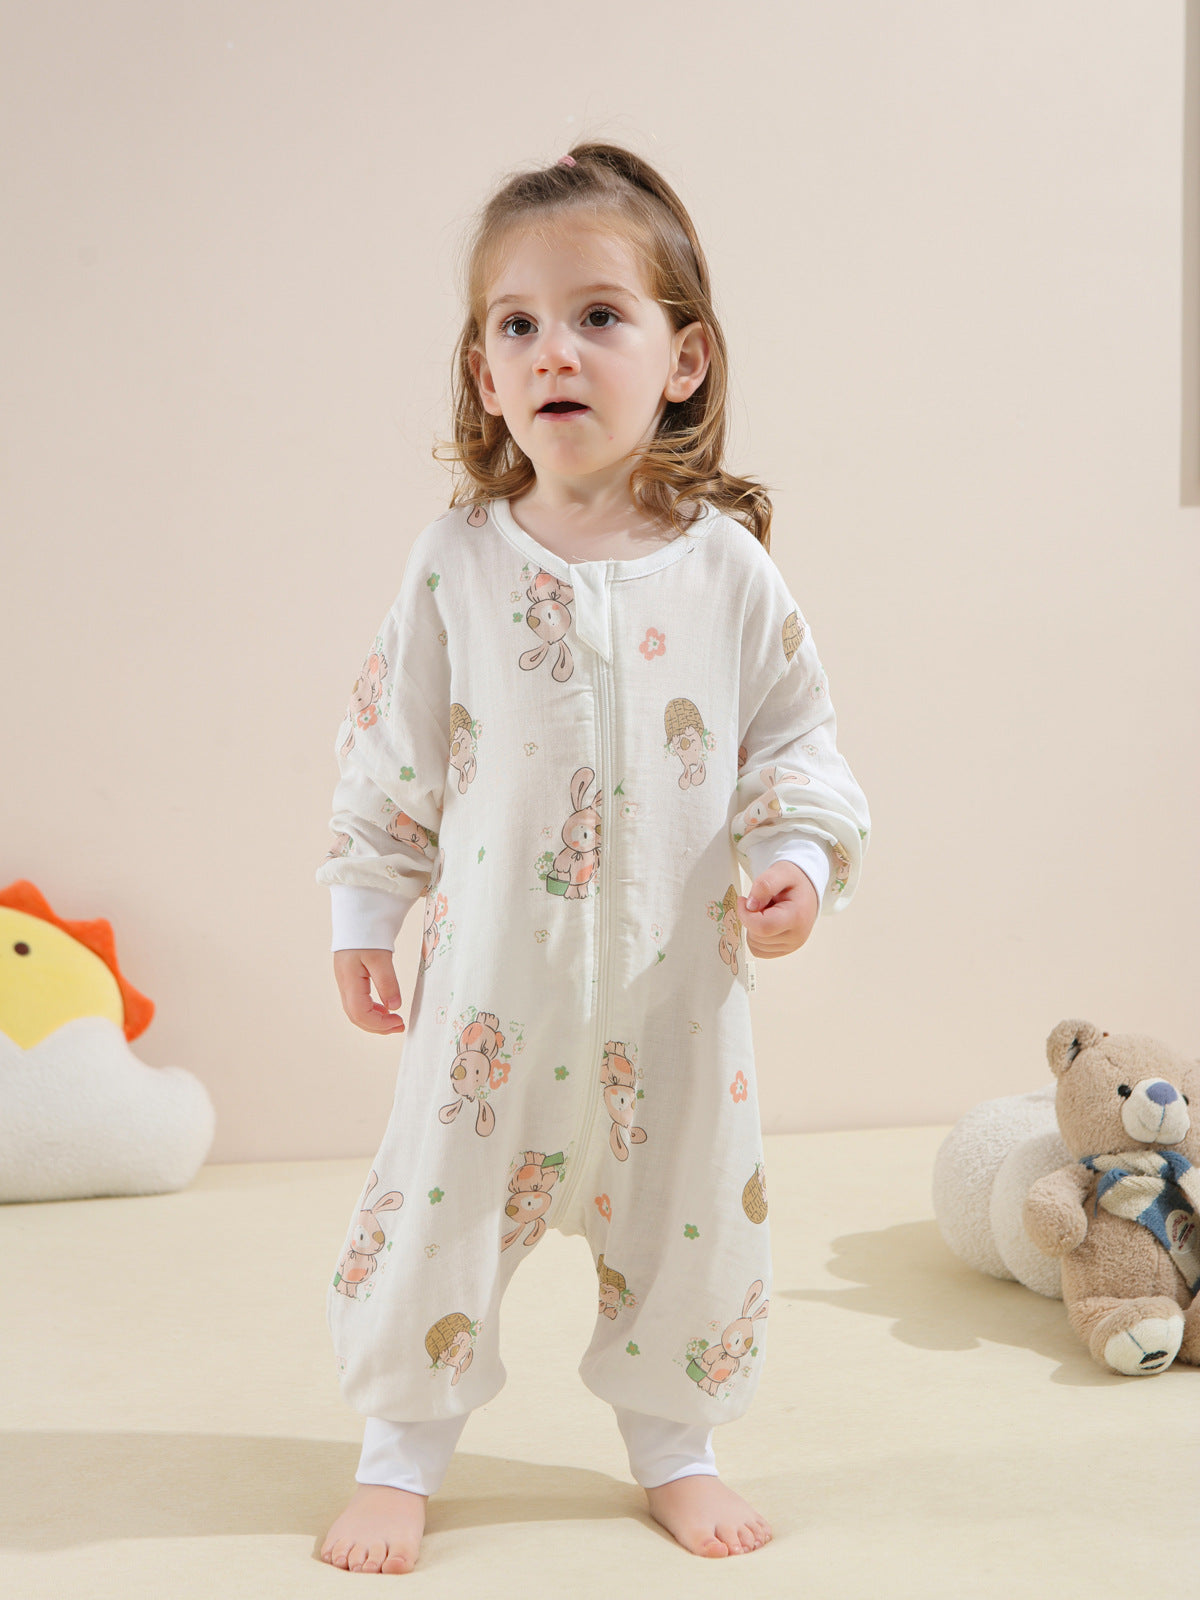 LionVII Pajamas for Children